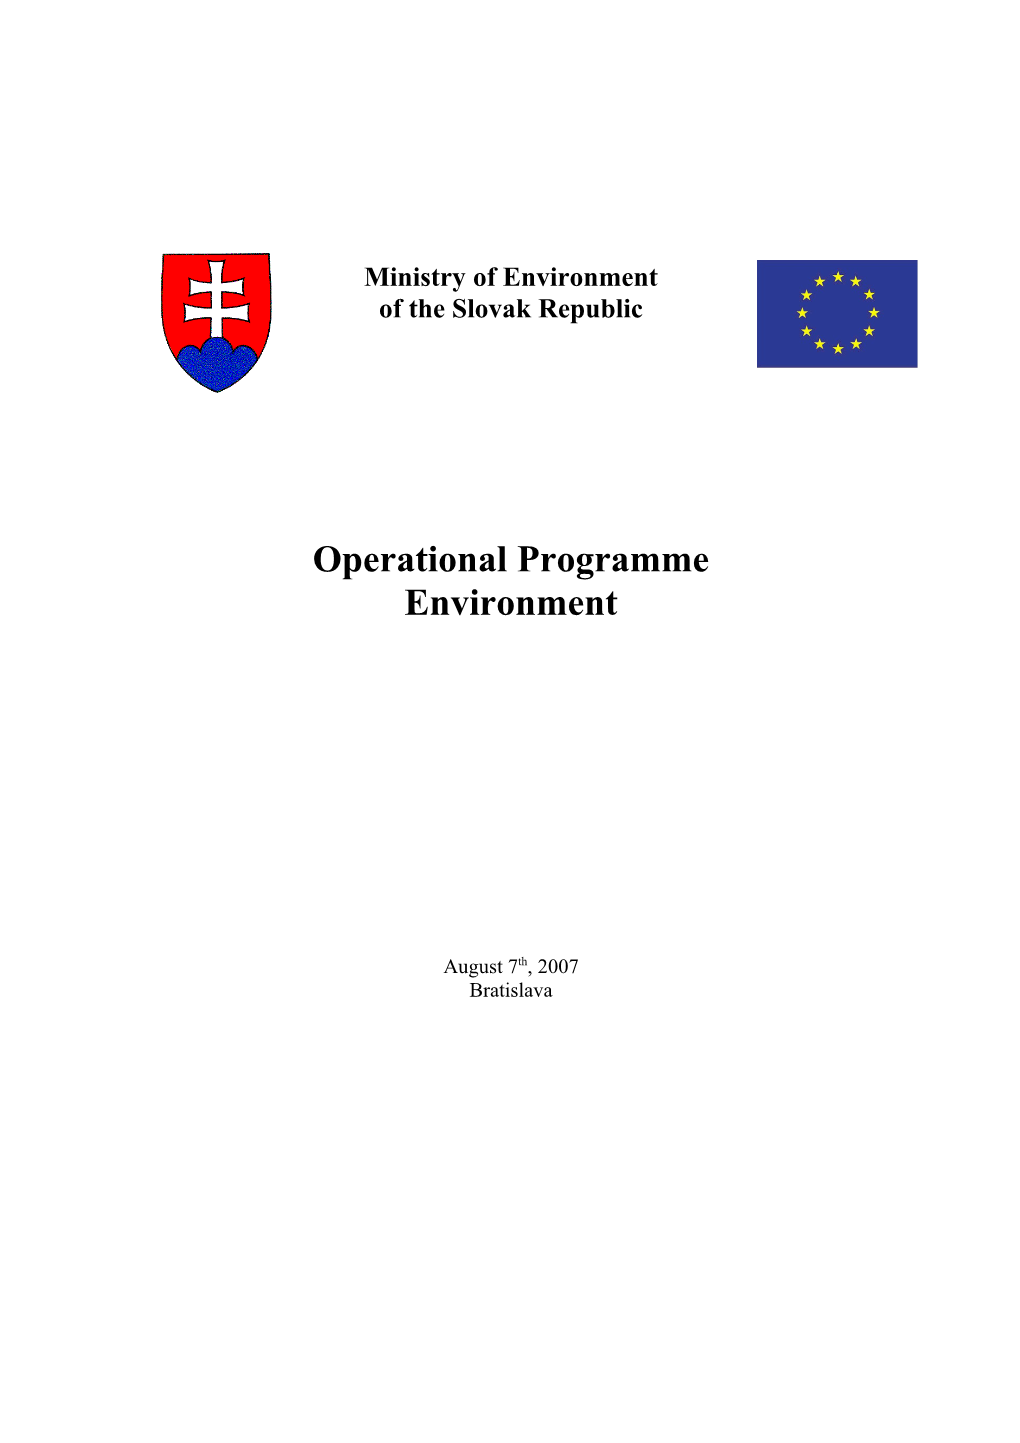 Operational Program Environment